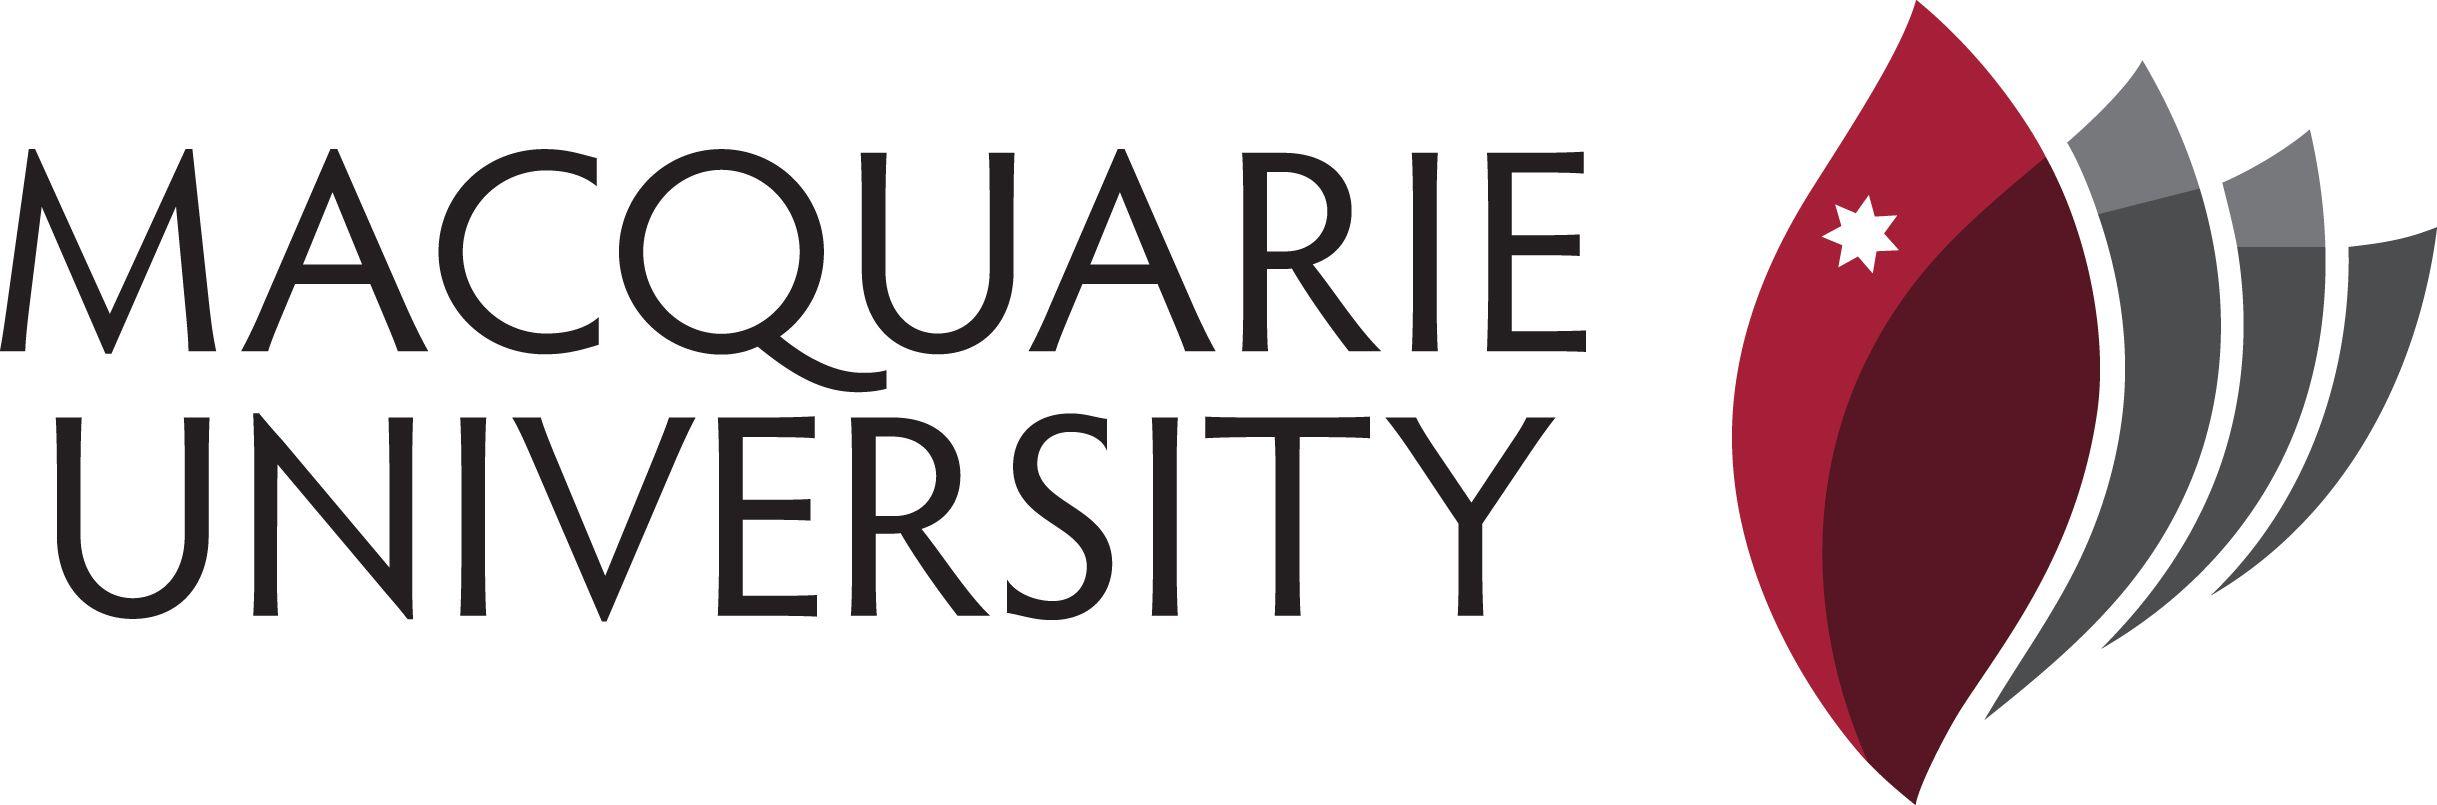 Macquarie Logo - Macquarie University Logo Font